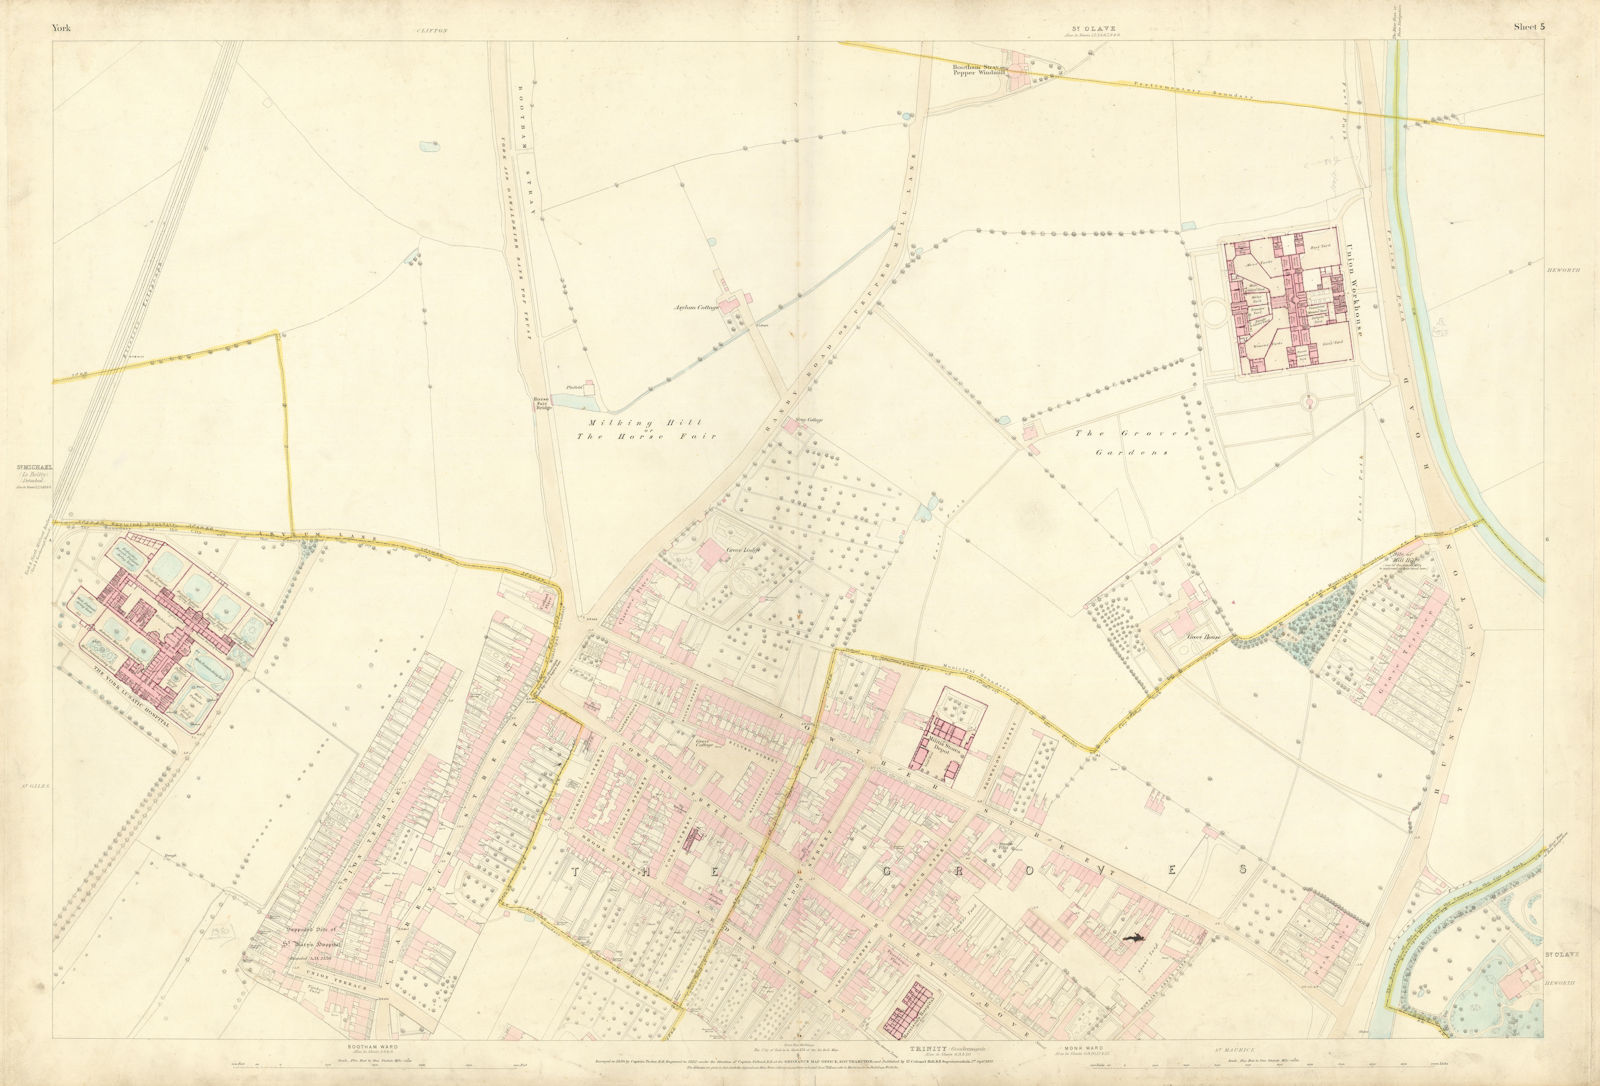 City of York #5 Groves Bootham Park Hospital St. John's Heworth. OS 1852 map